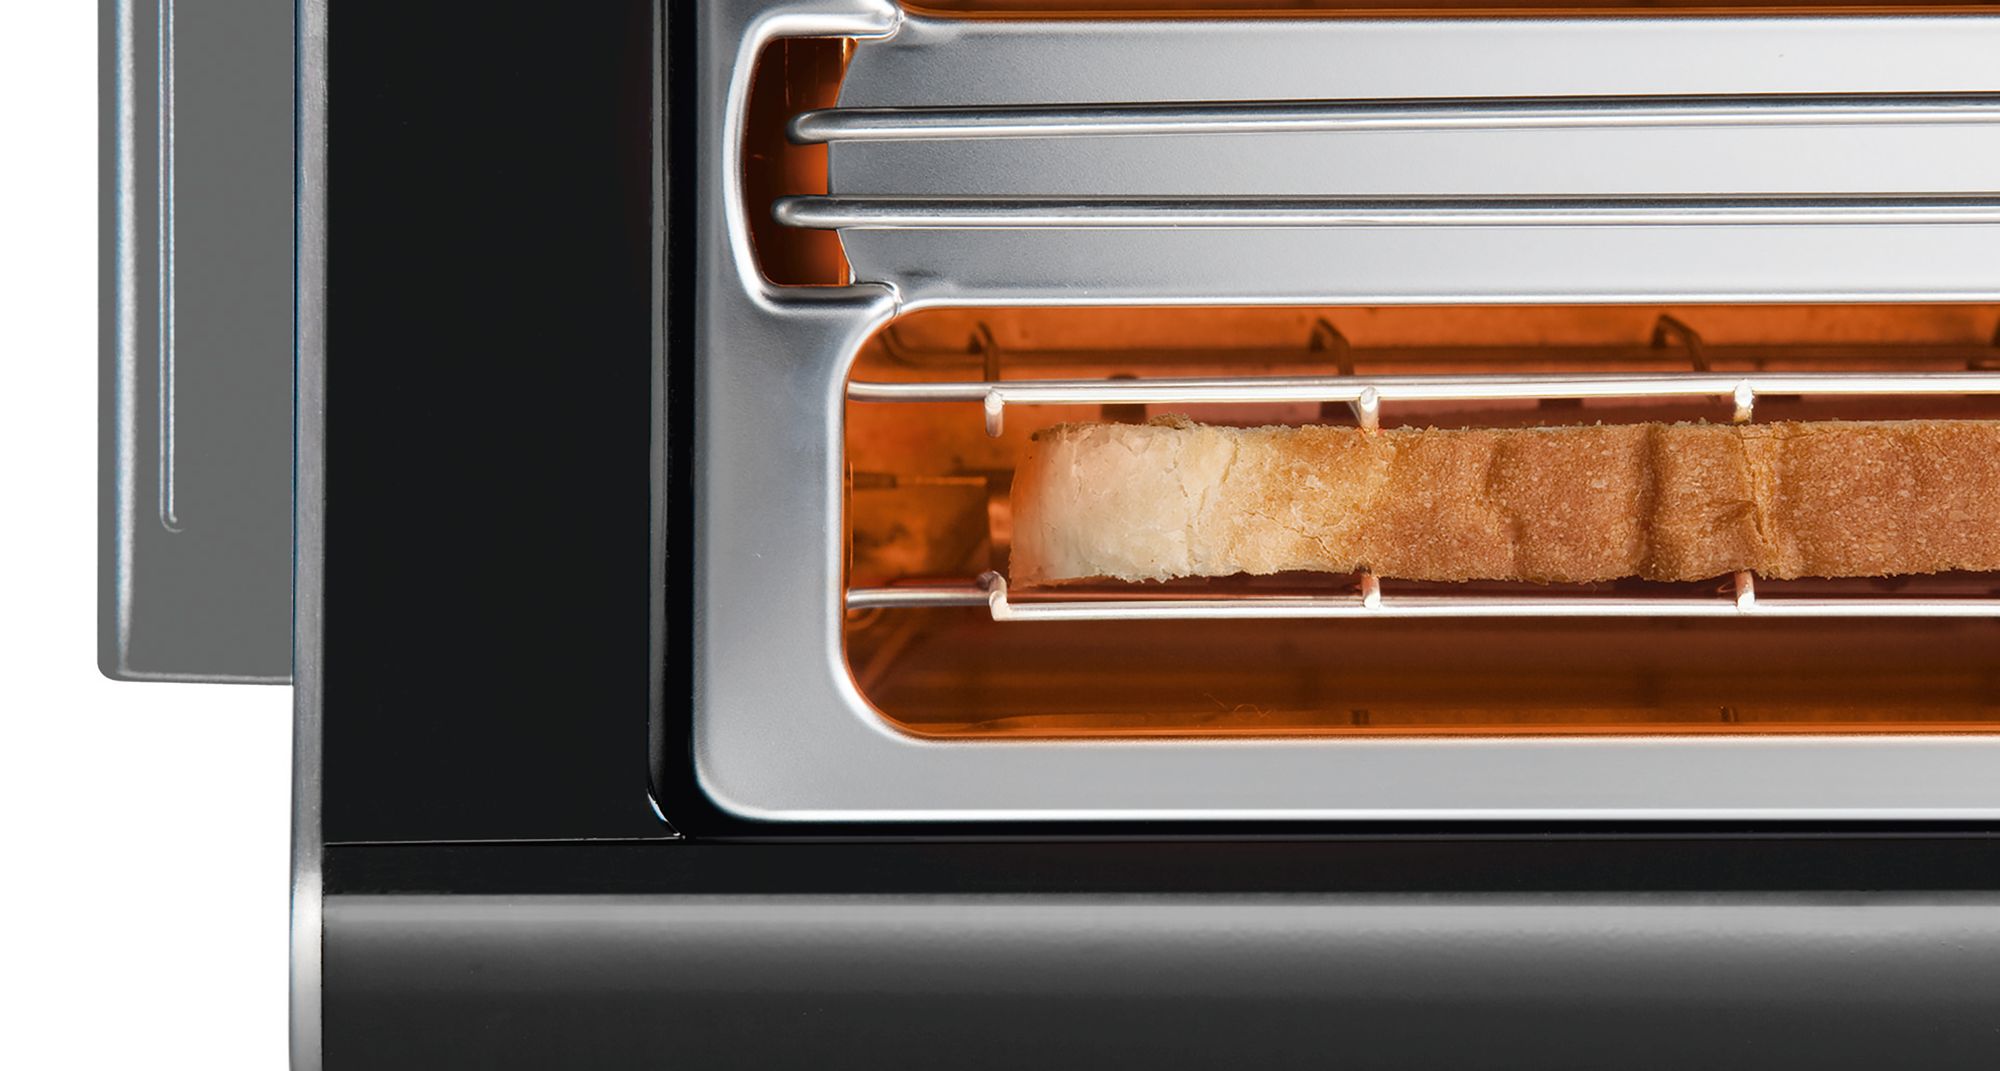 Compact toaster sensor for senses siyah